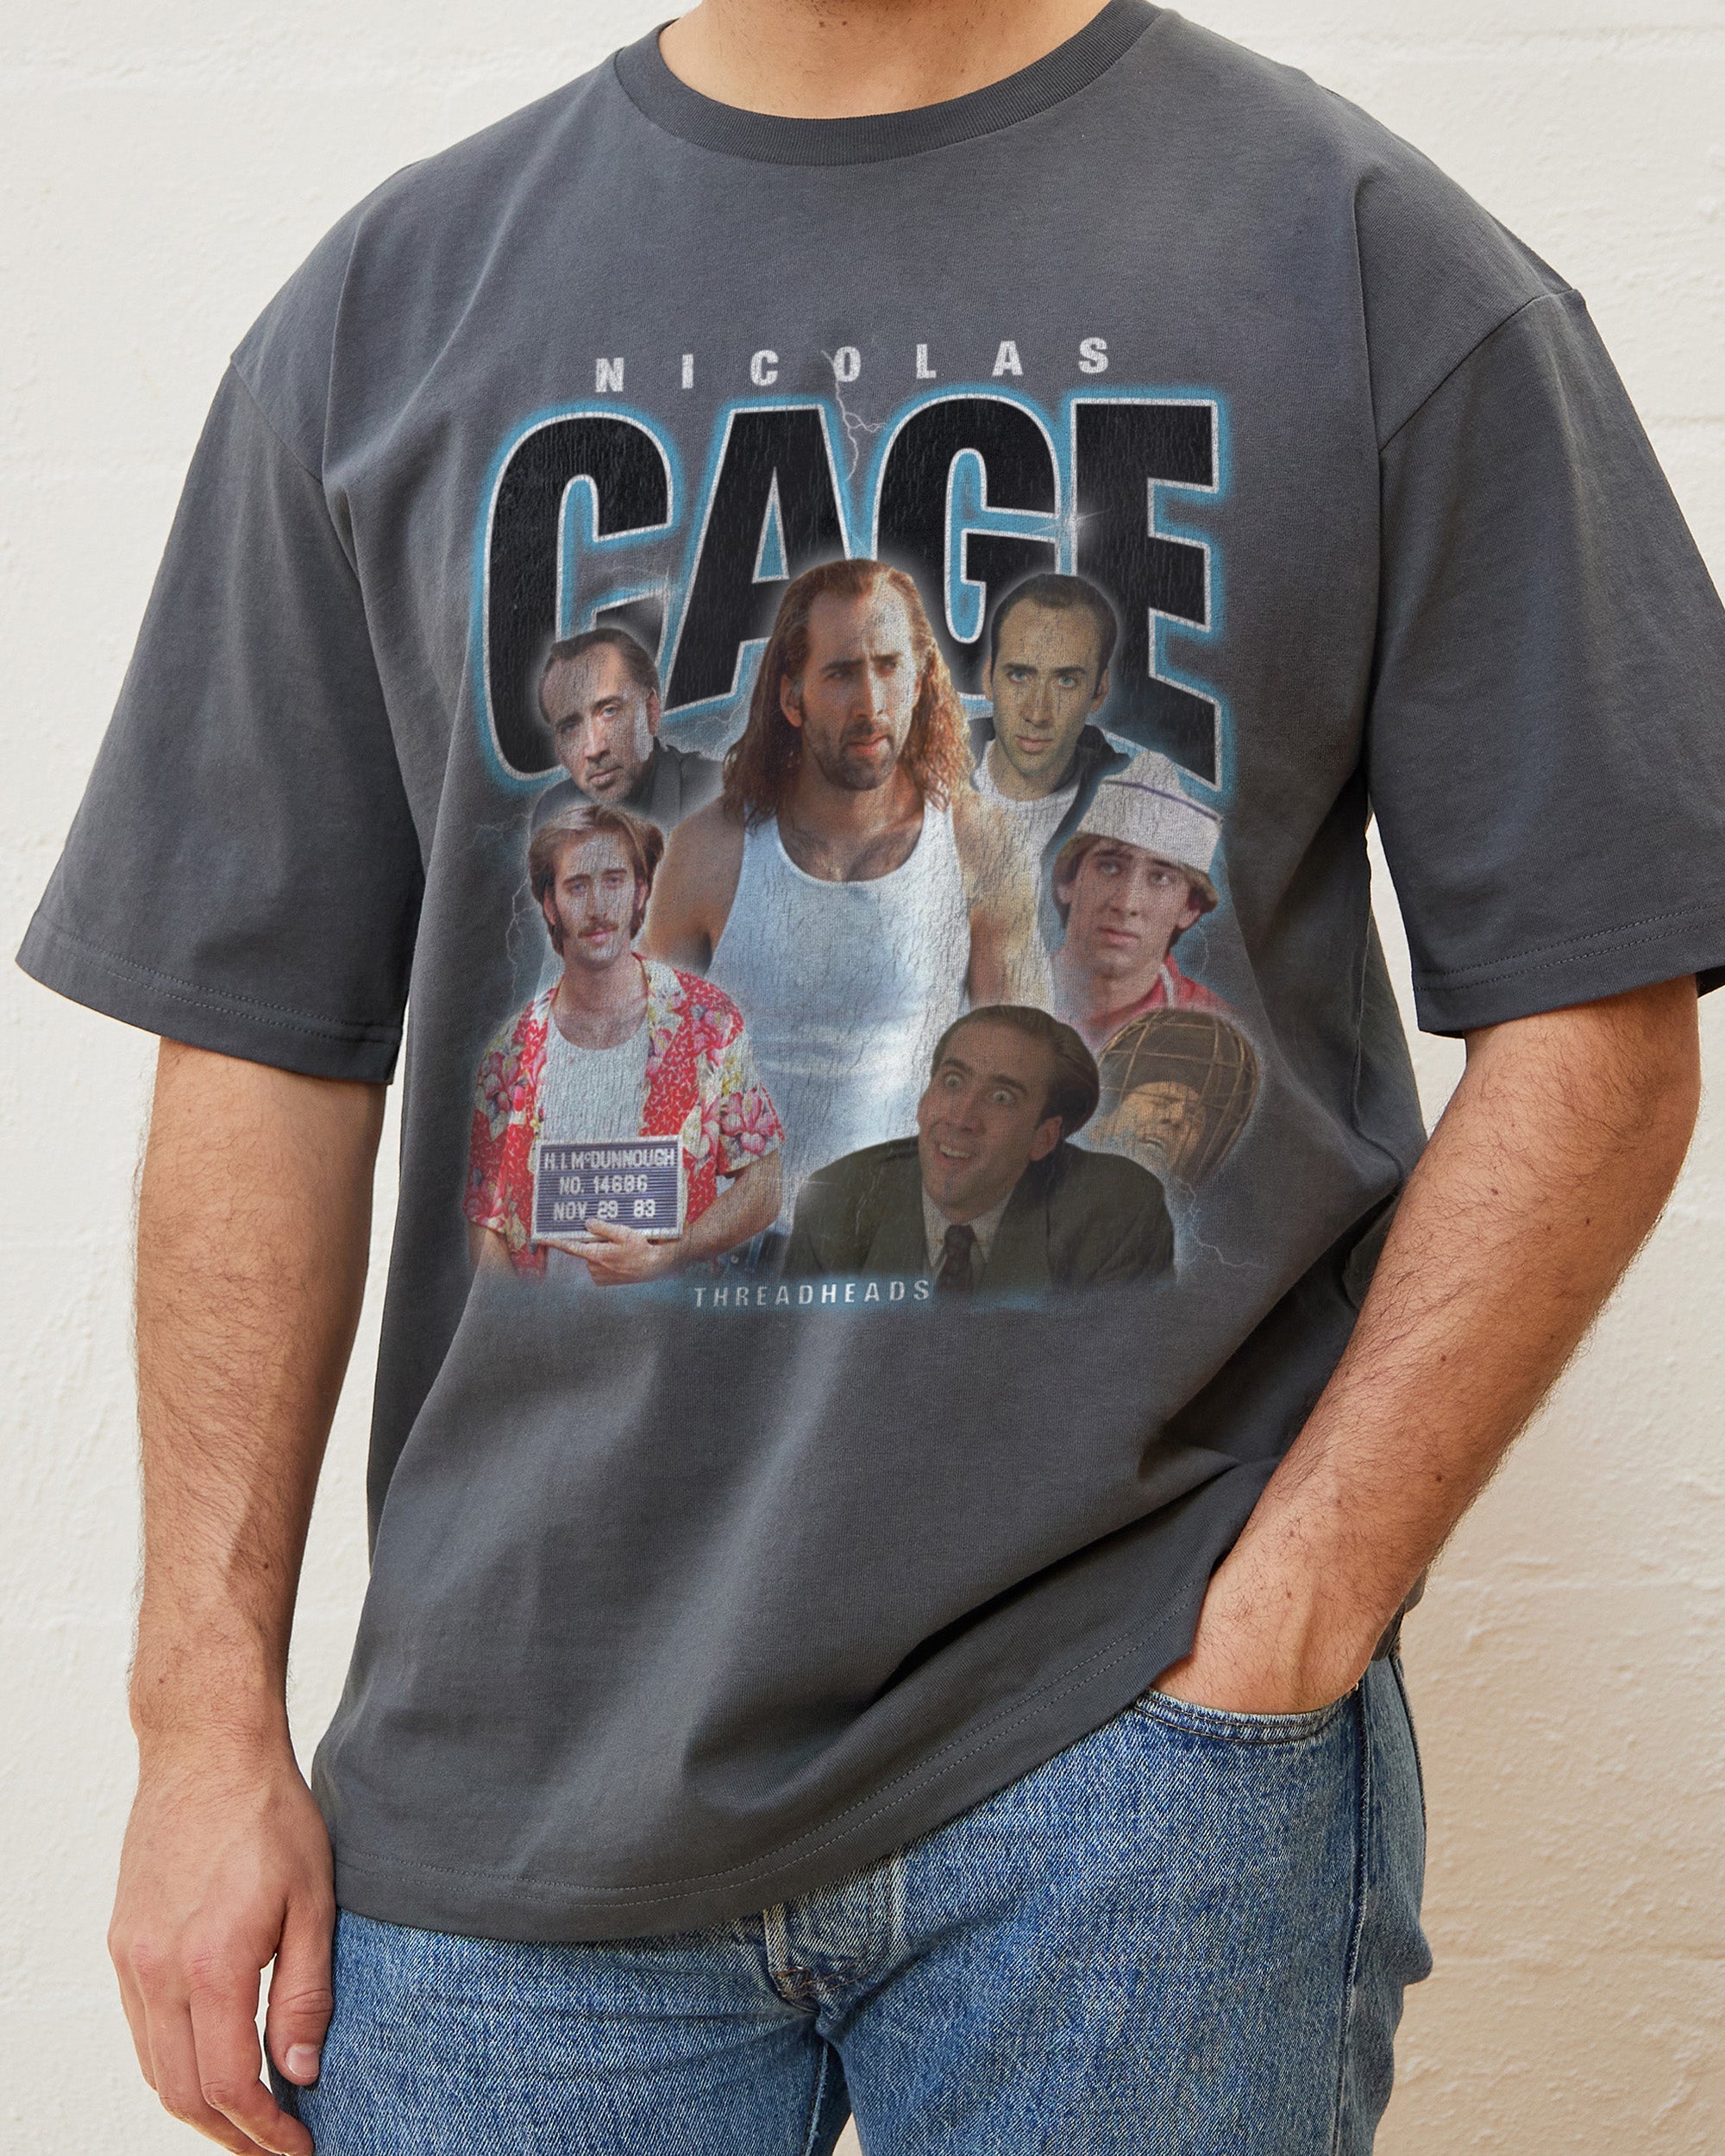 Nic Cage T-Shirt Australia Online Charcoal